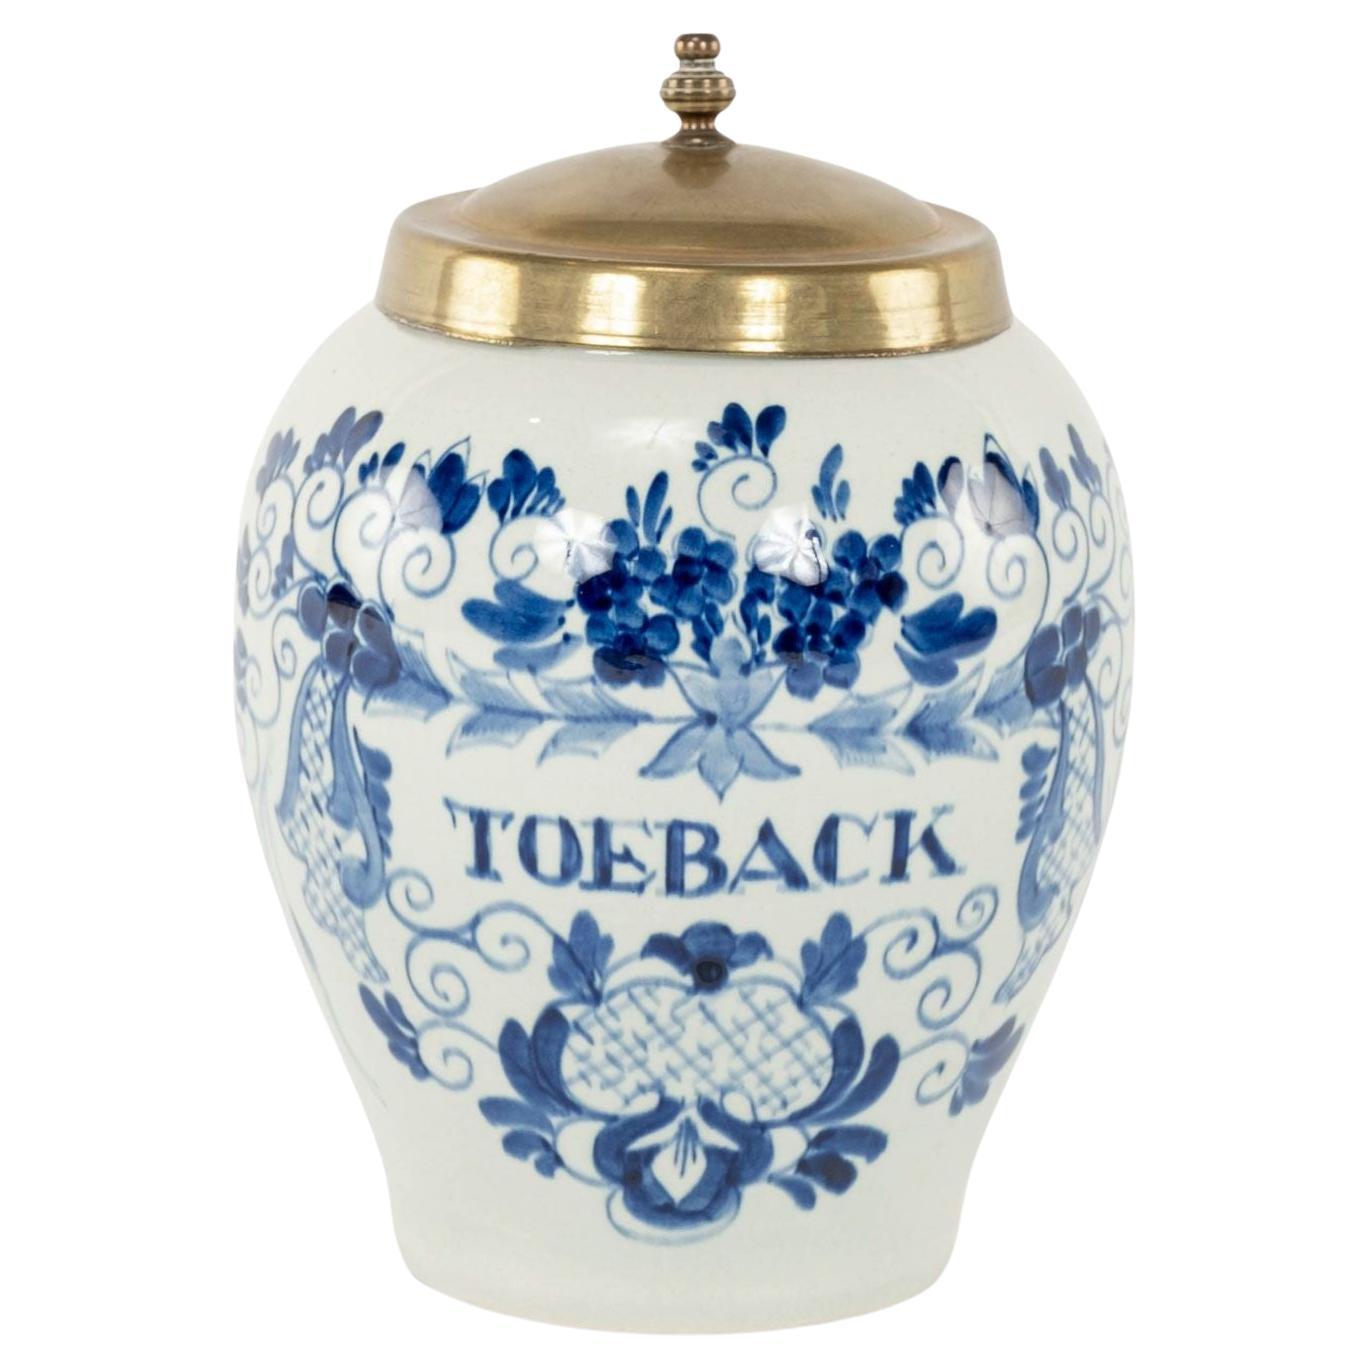 Delft Blue and White "Toeback" Tobacco Jar For Sale